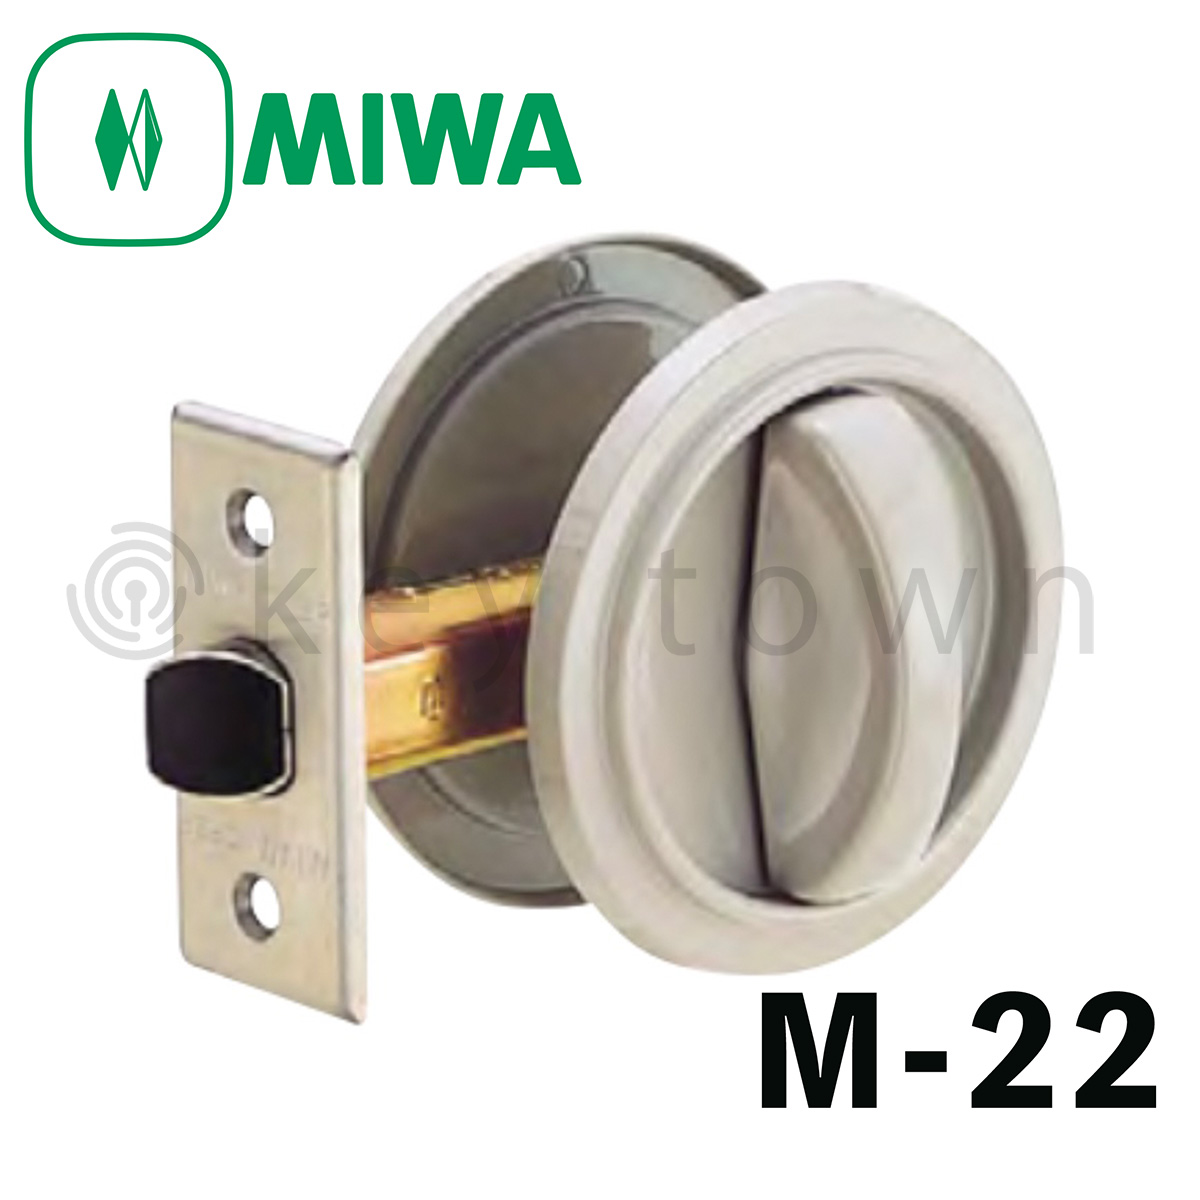 MIWA 【美和ロック】 室内 浴室 トイレ [MIWA-M-22] Kシリーズ[M-22]｜鍵・シリンダーの格安ネット通販【鍵TOWN】